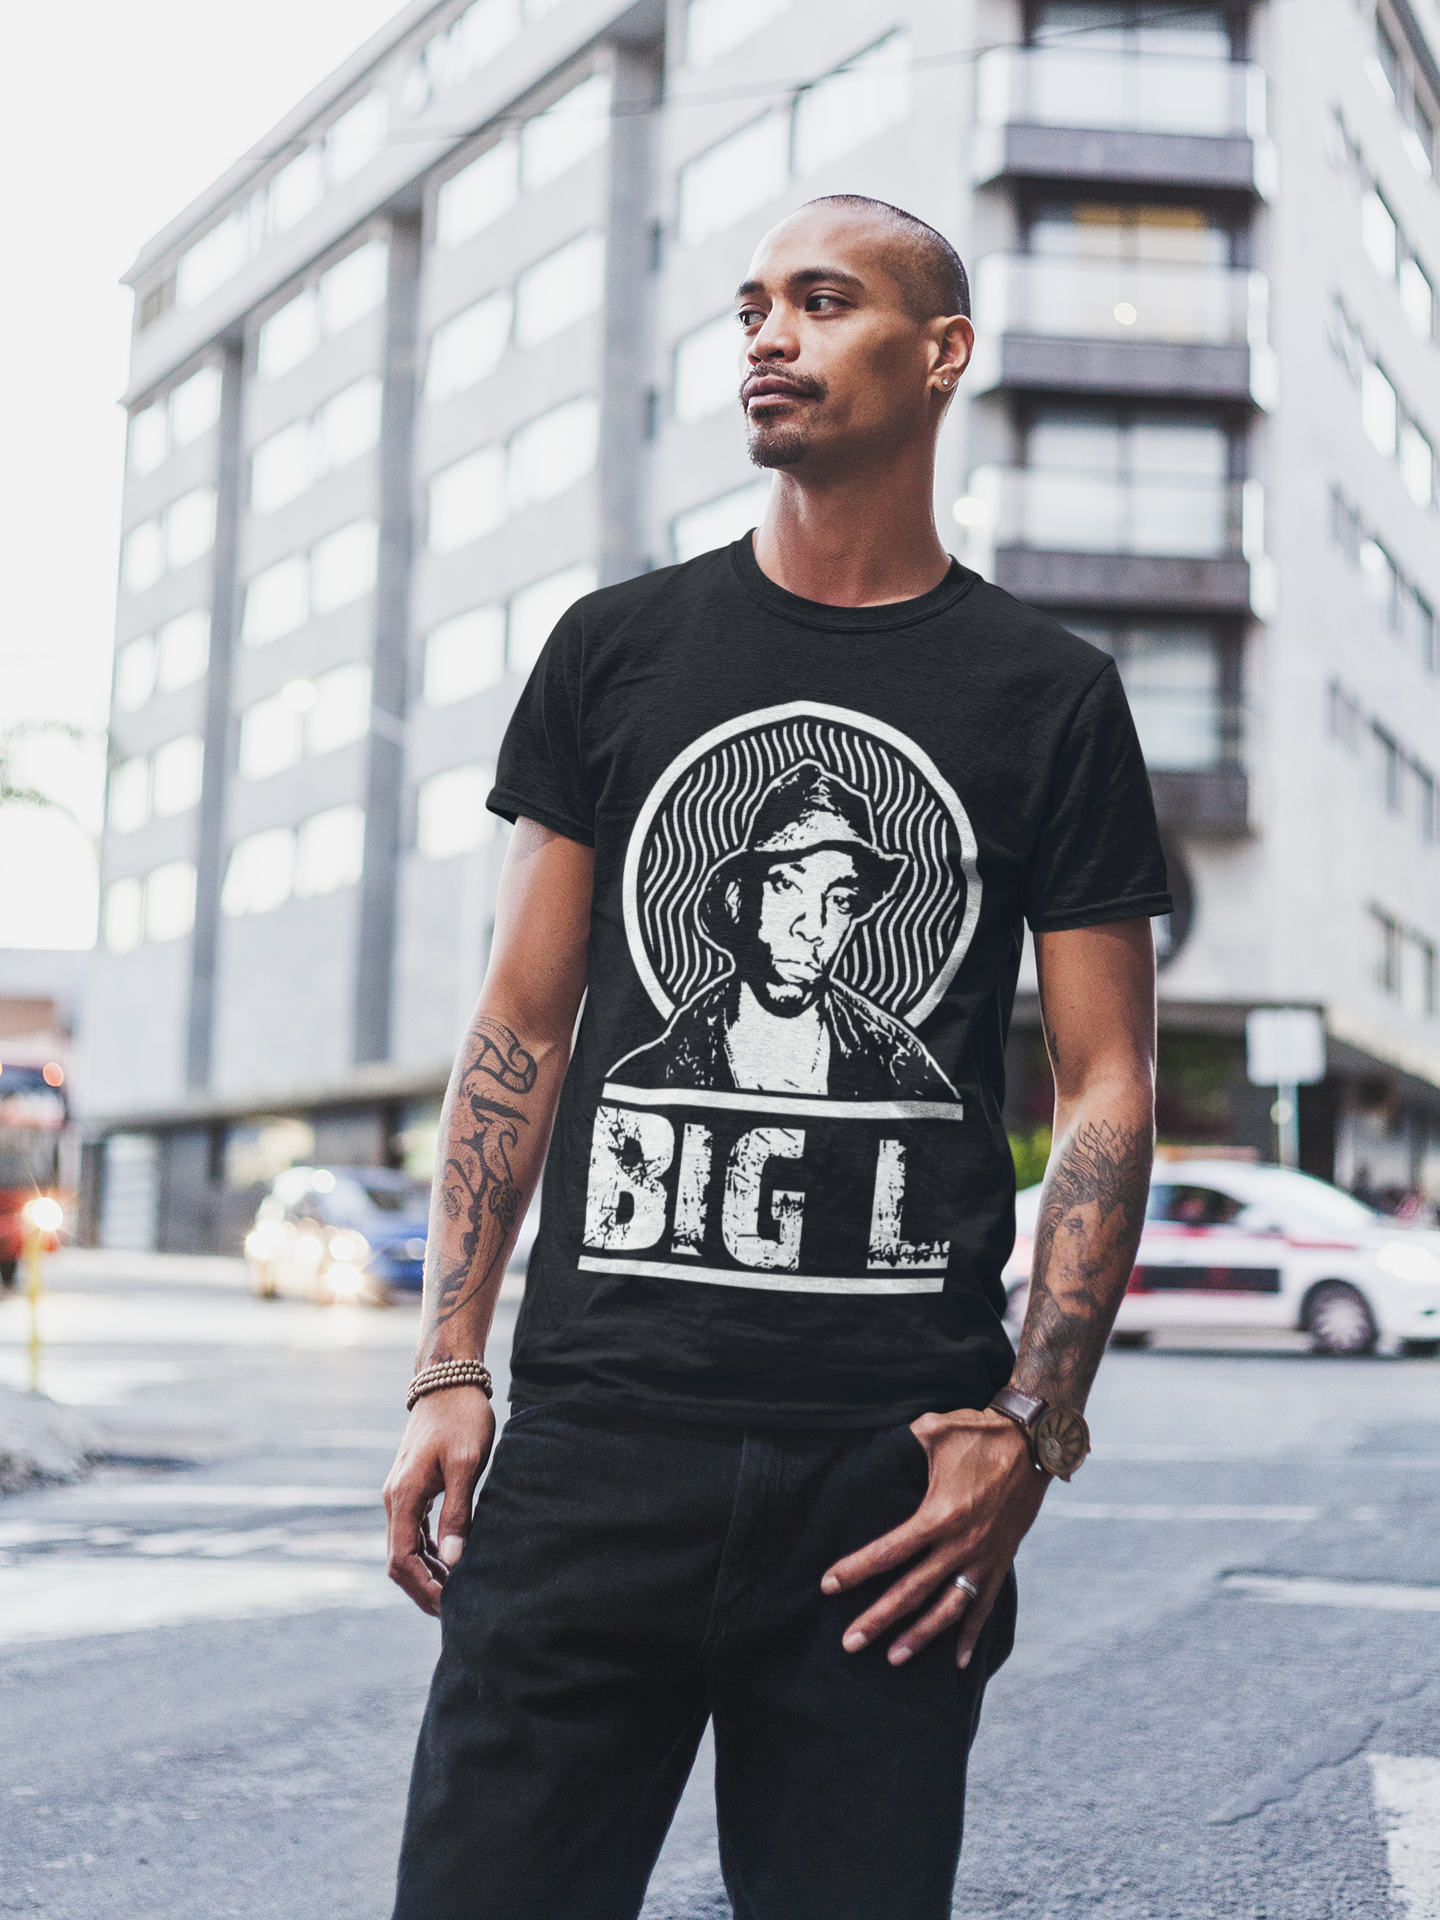 Big L Hip Hop T-Shirt Tees FREE Iconic Range Clothing Streetw – One Stop Hop UK